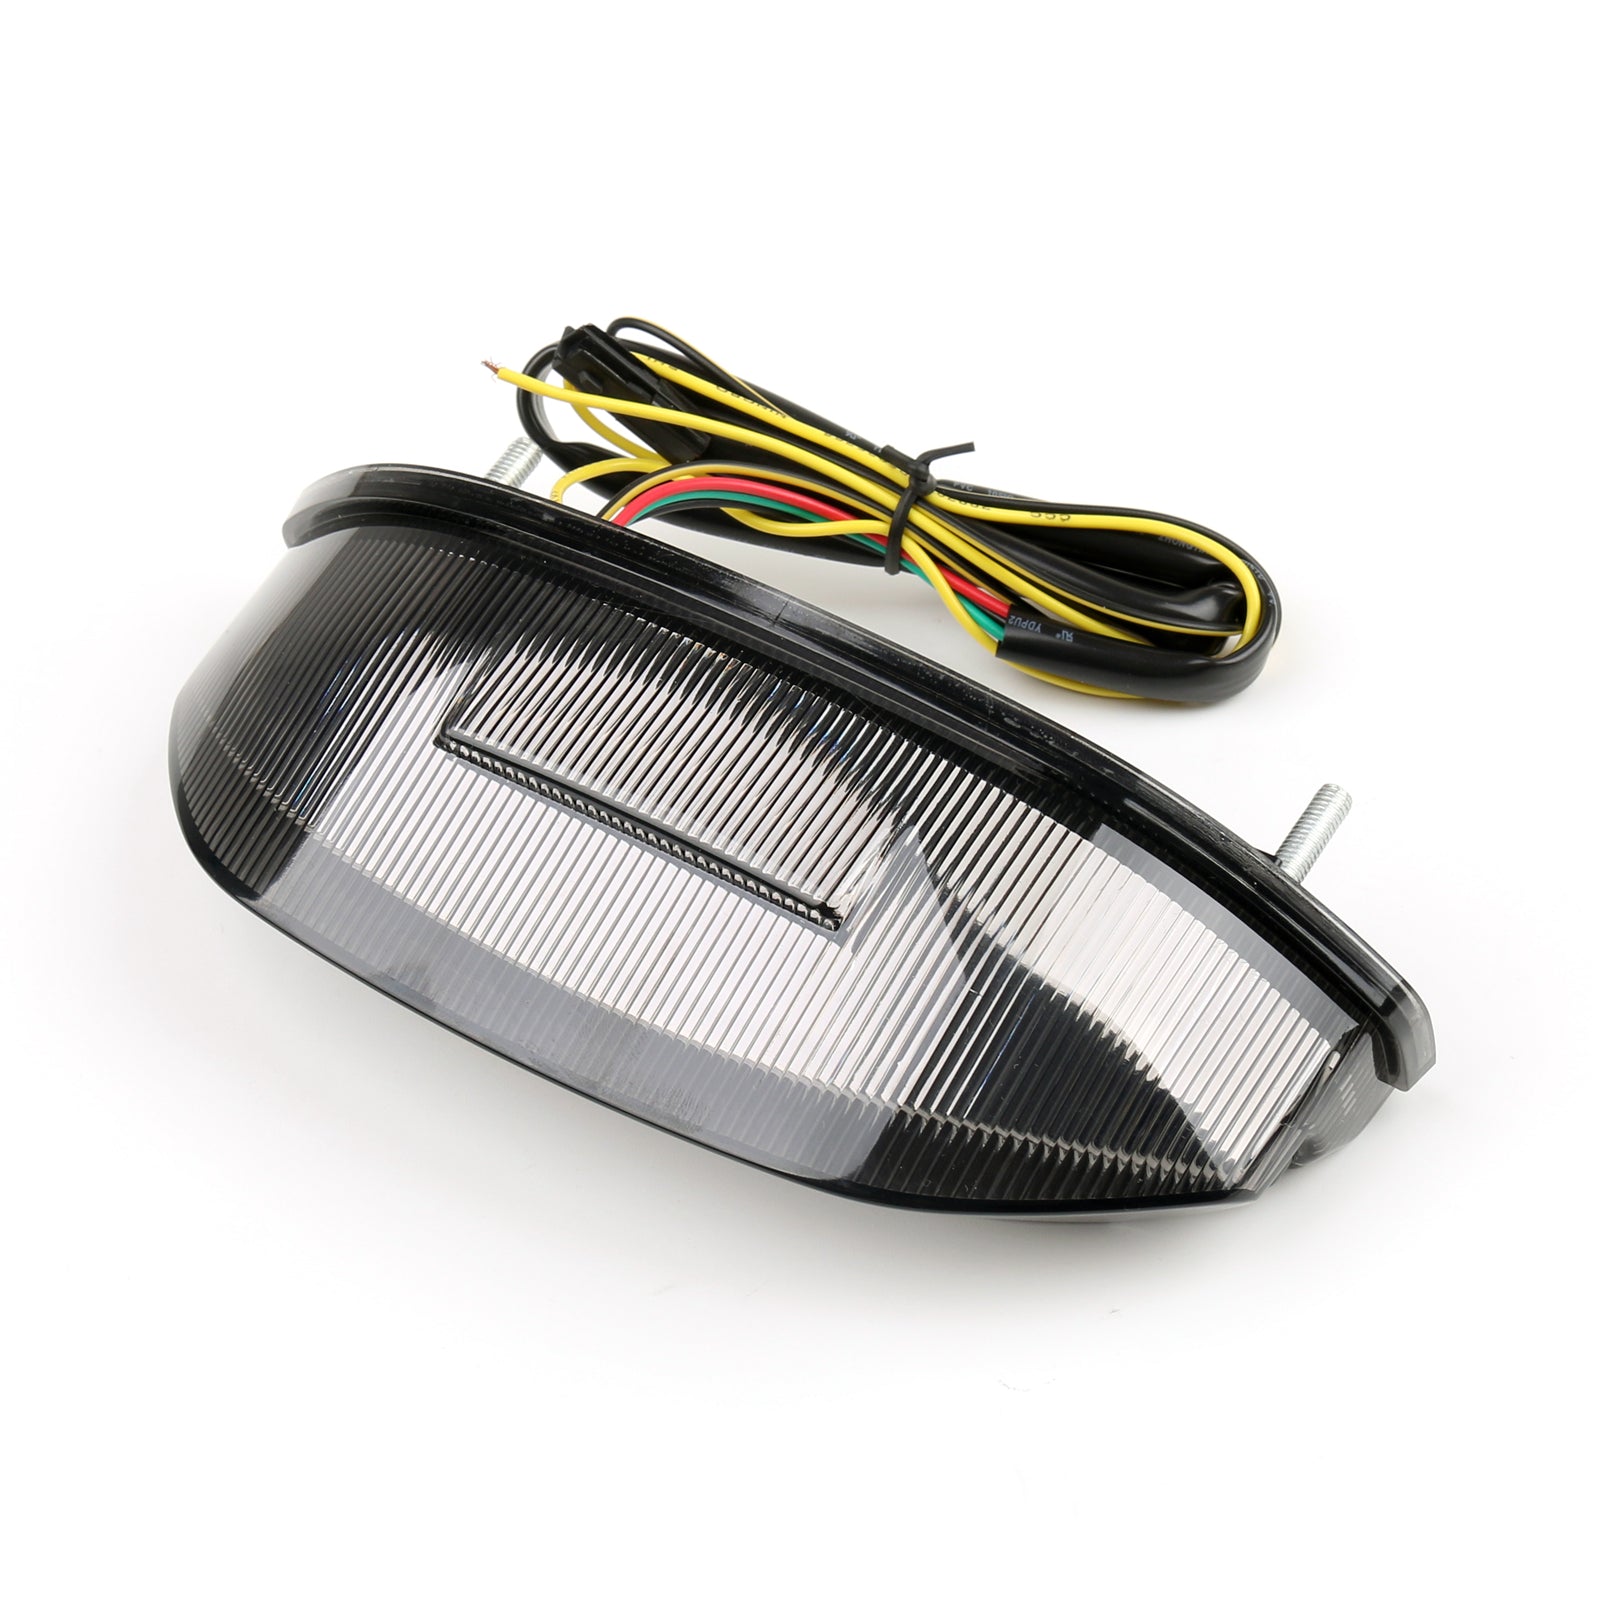 Indicatori di direzione fanali posteriori a LED integrati per Honda CBR600RR 2013-2014 Trasparente